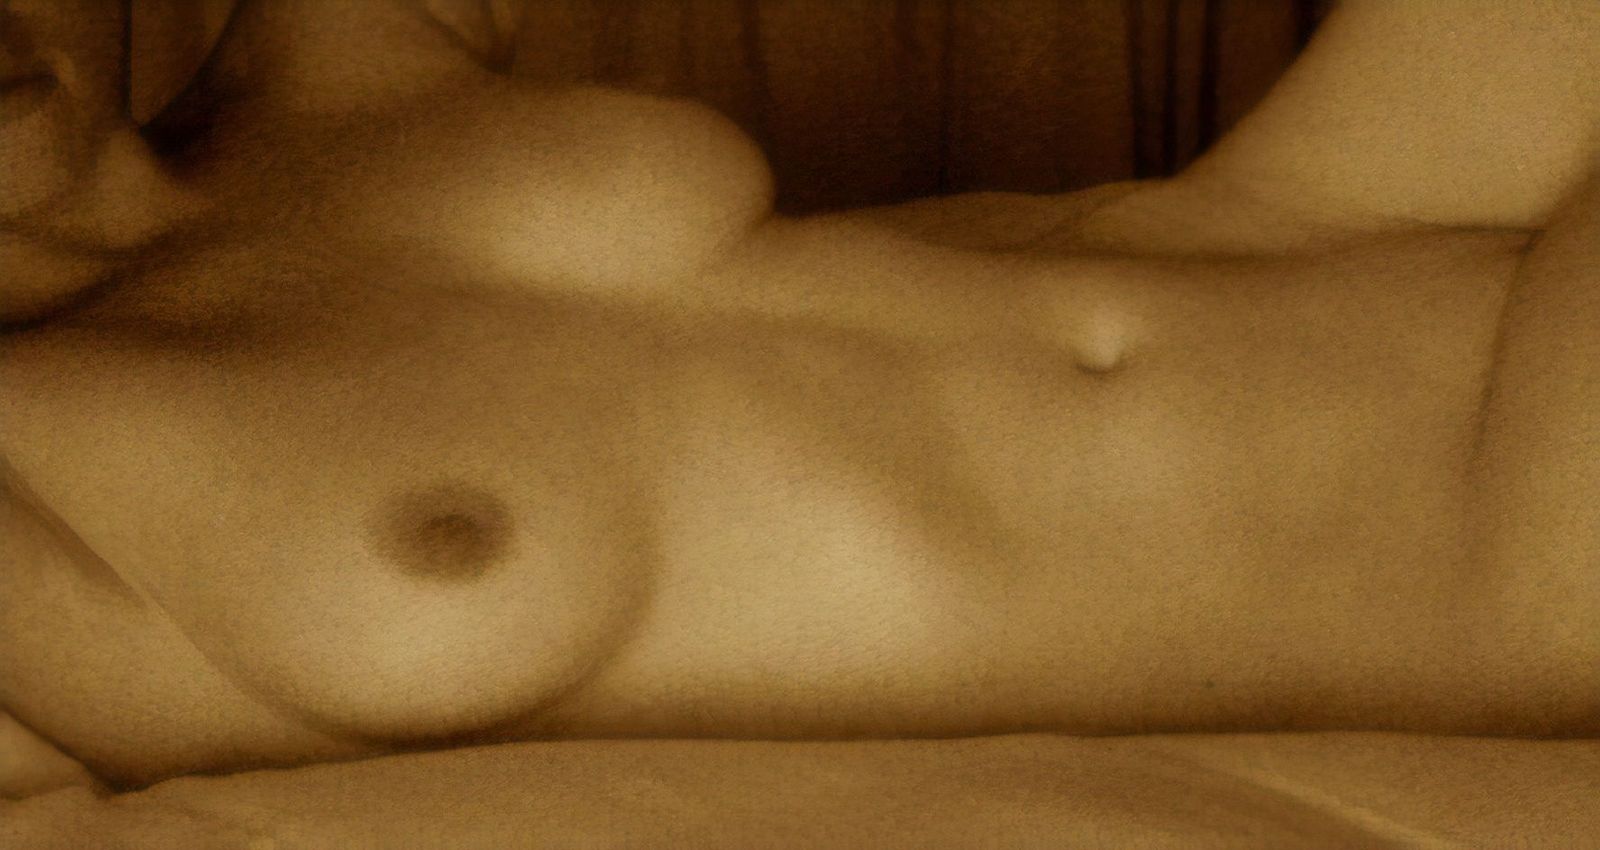 Bonita chava tetona sin ropa | Fotos caseras de mujeres maduras desnudas, m...